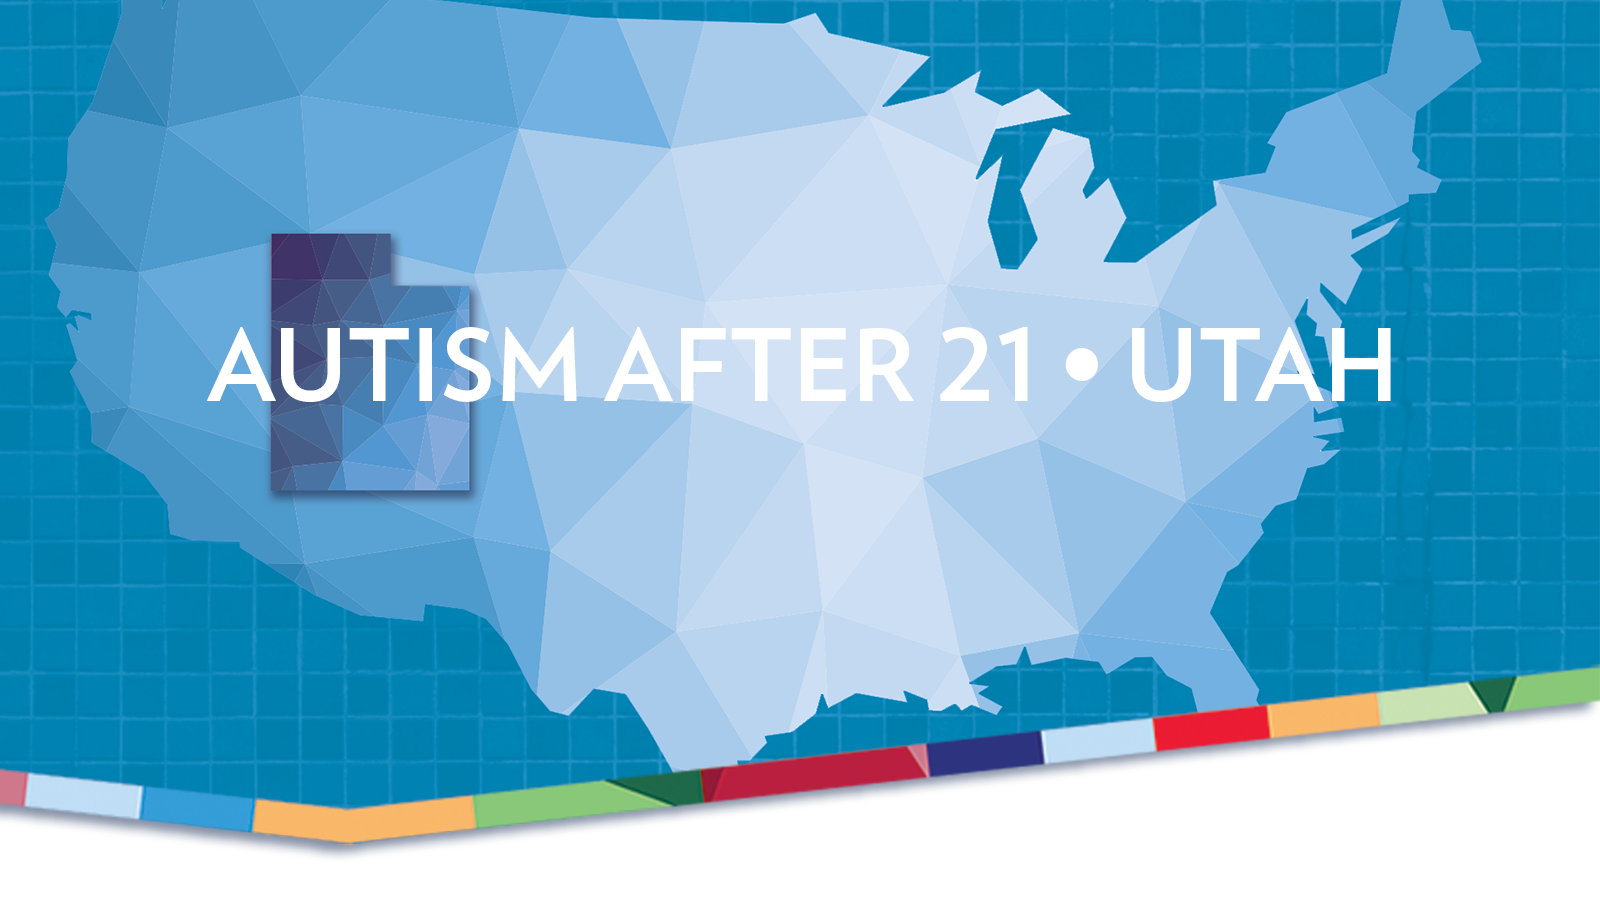 Autism After 21 Utah